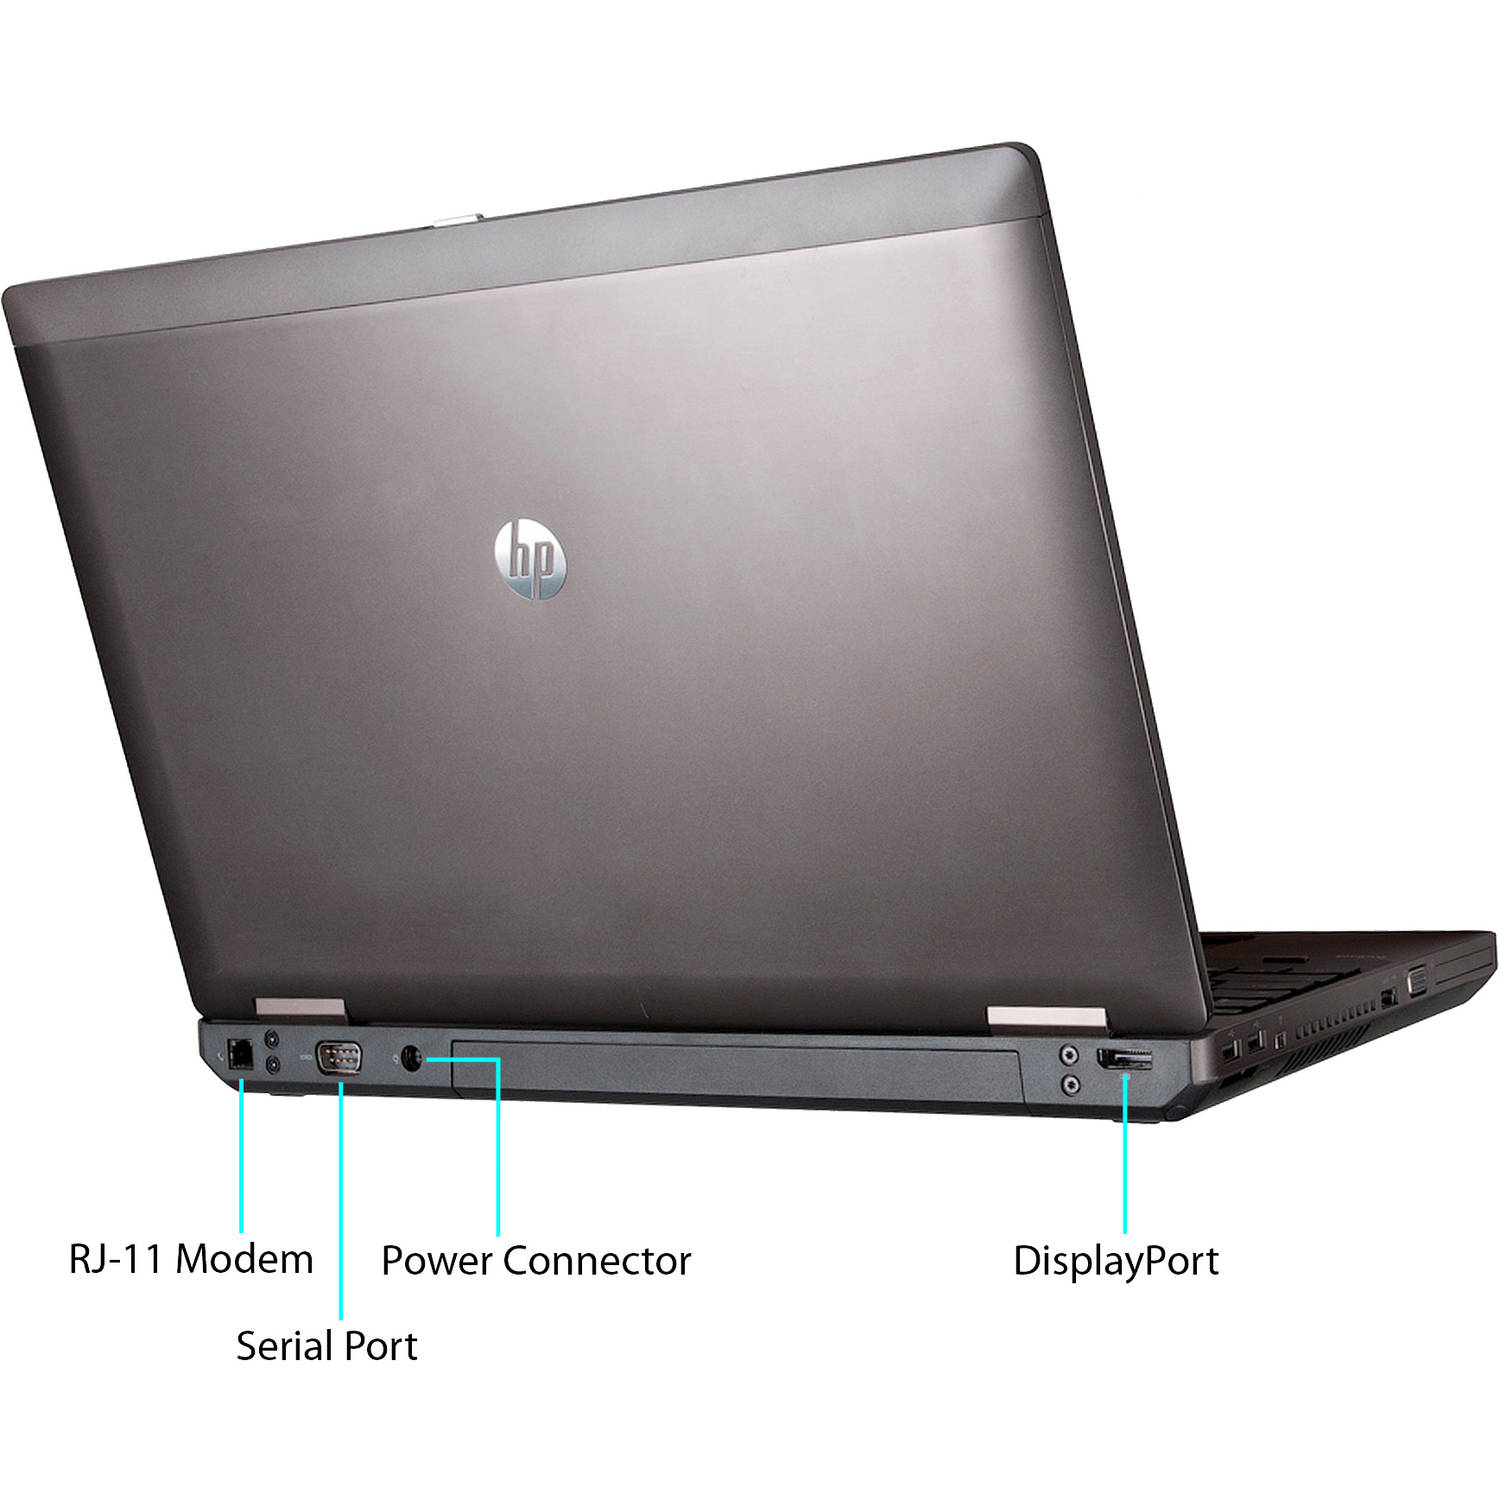 HP 15.6" ProBook 6570B WA5-0879 Laptop PC with Intel Core i5-3210M Processor, 12GB Memory, 750GB Hard Drive and Windows 10 Pro (Refurbished) - image 4 of 5